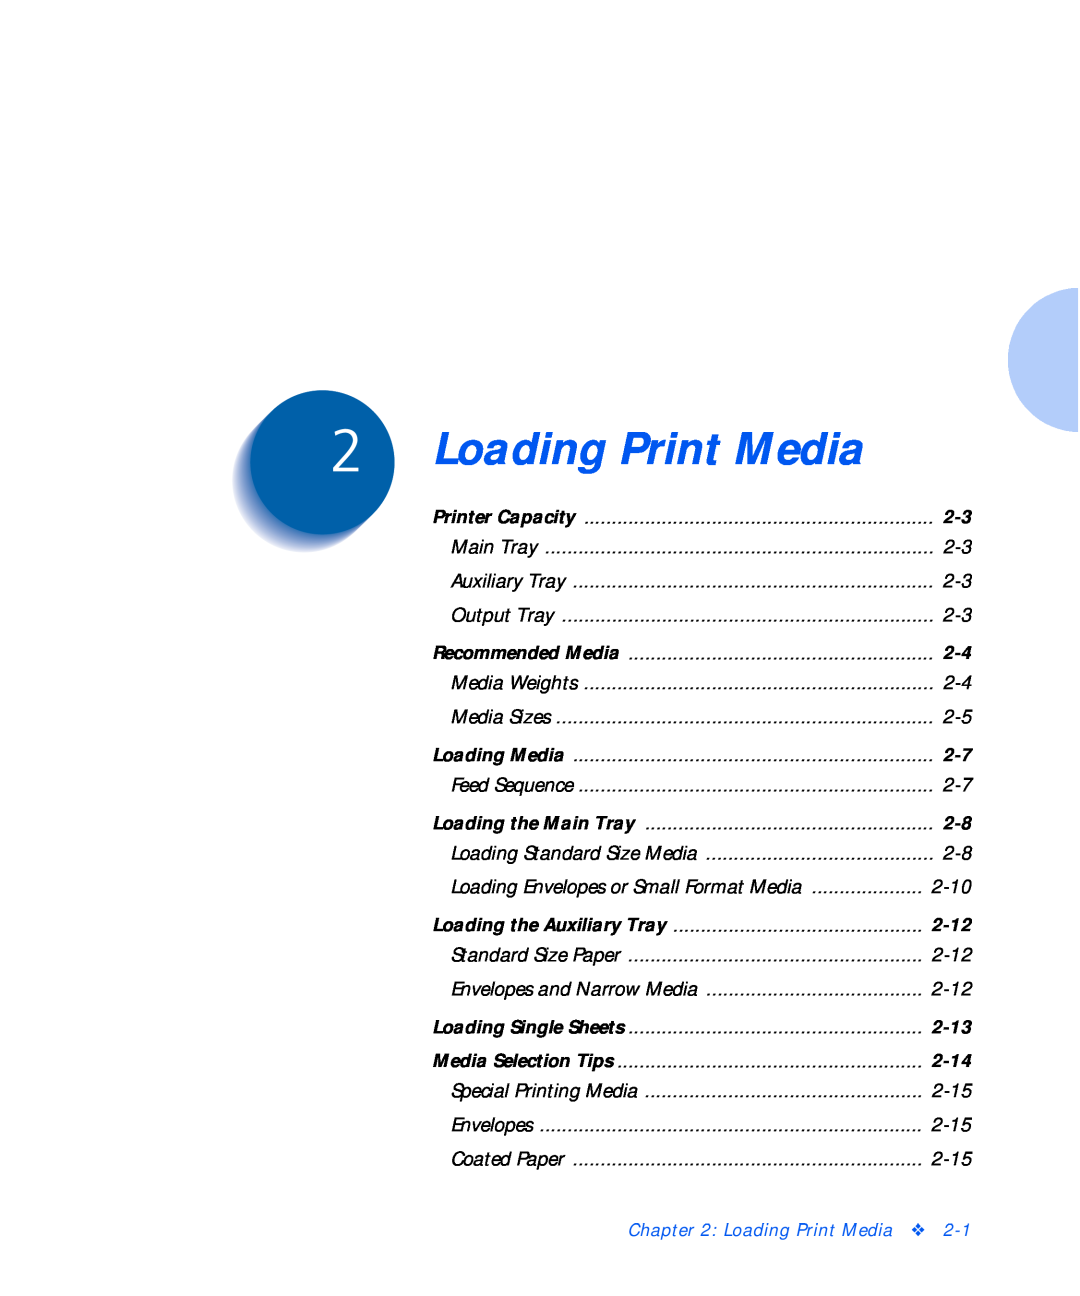 Xerox C15 manual Loading Print Media, 2-12, 2-13, 2-14 